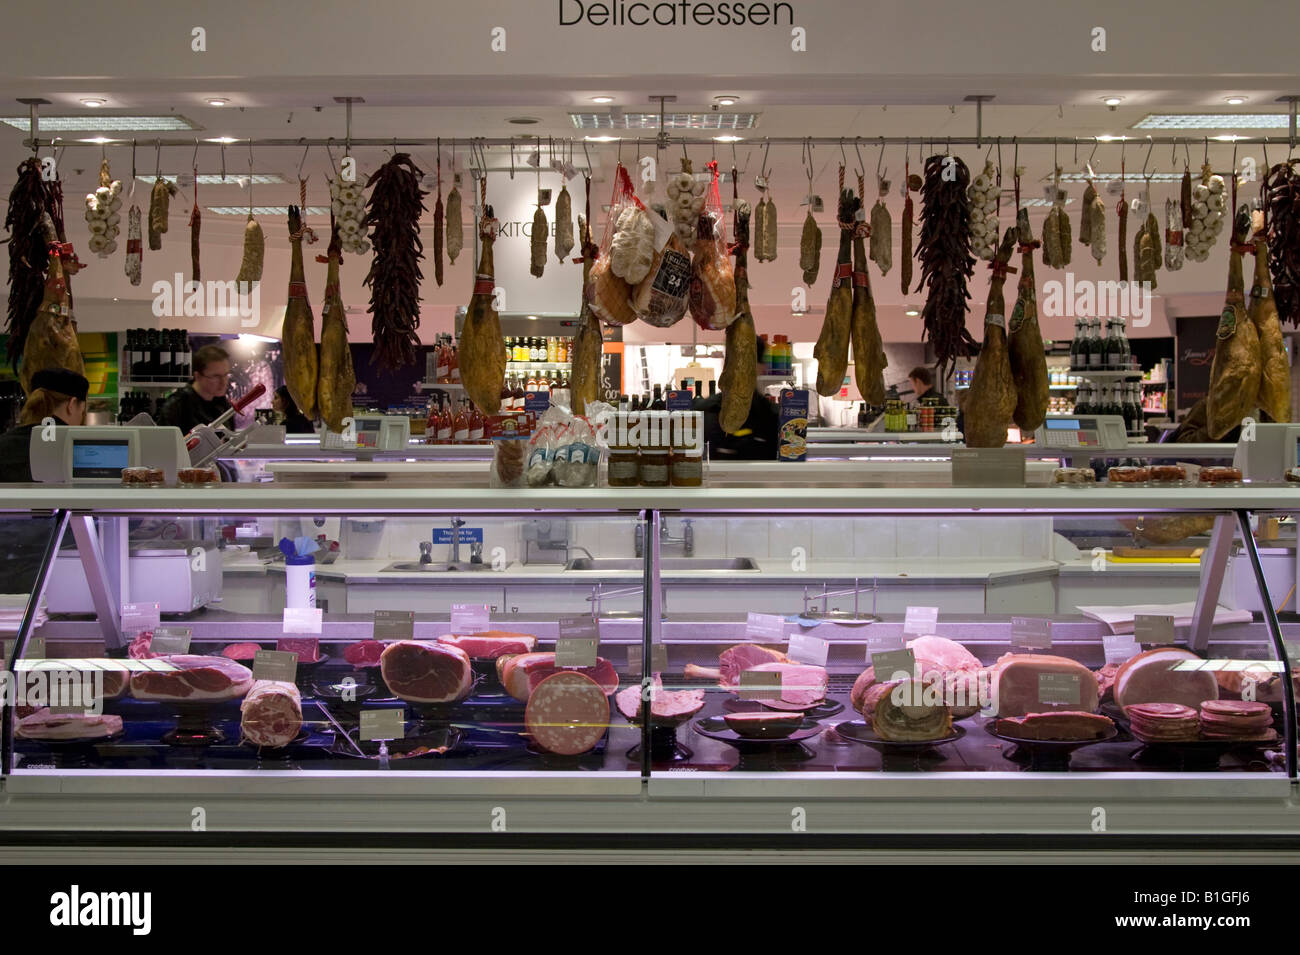 Delicatessen - Selfridge's Food Hall - Oxford Street - London Stock Photo